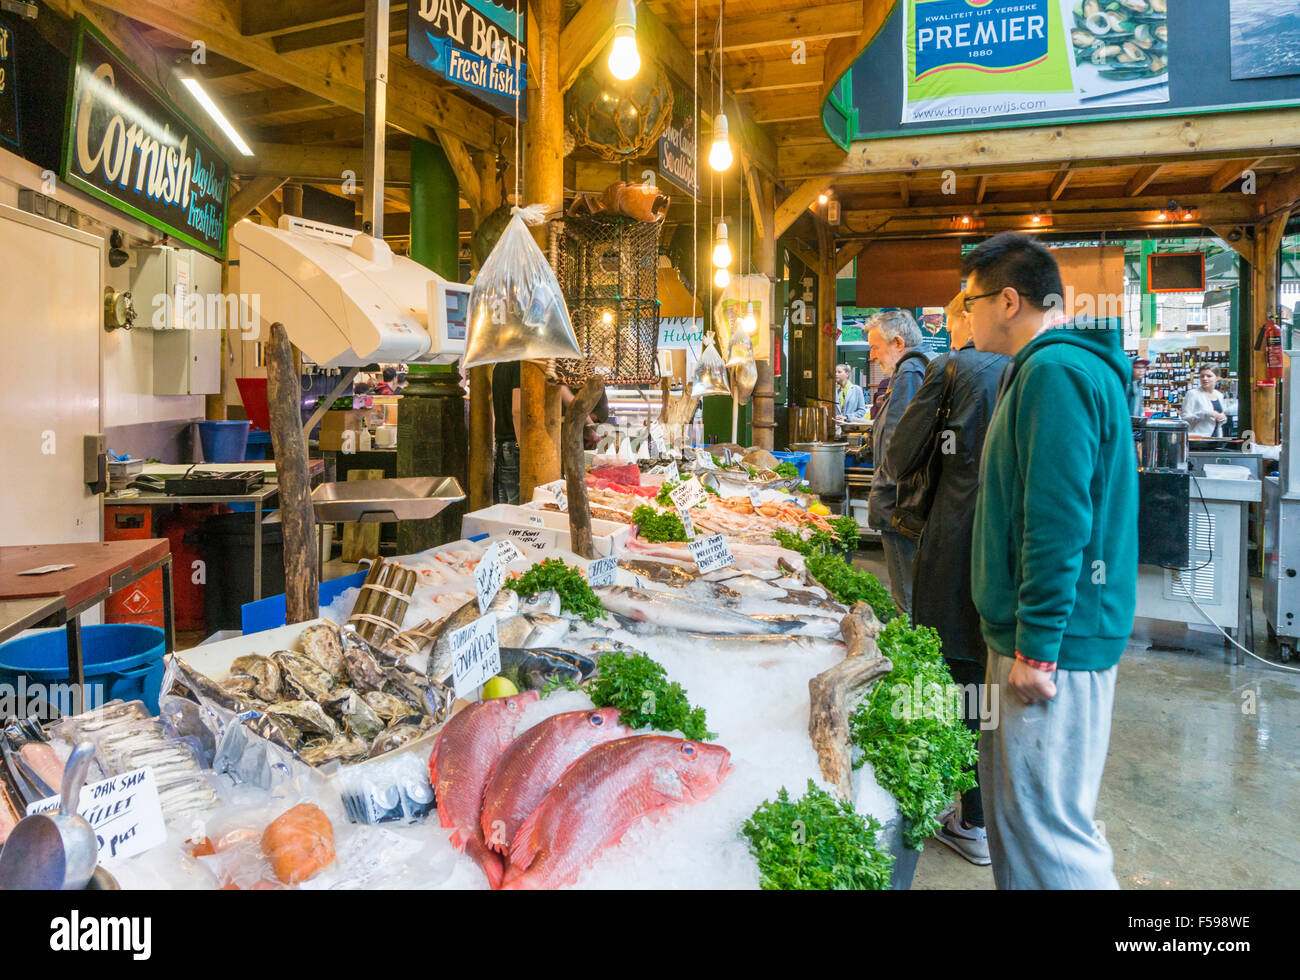 Fishmonger stall at Borough market selling fresh fish borough high street London England UK GB EU Europe Stock Photo